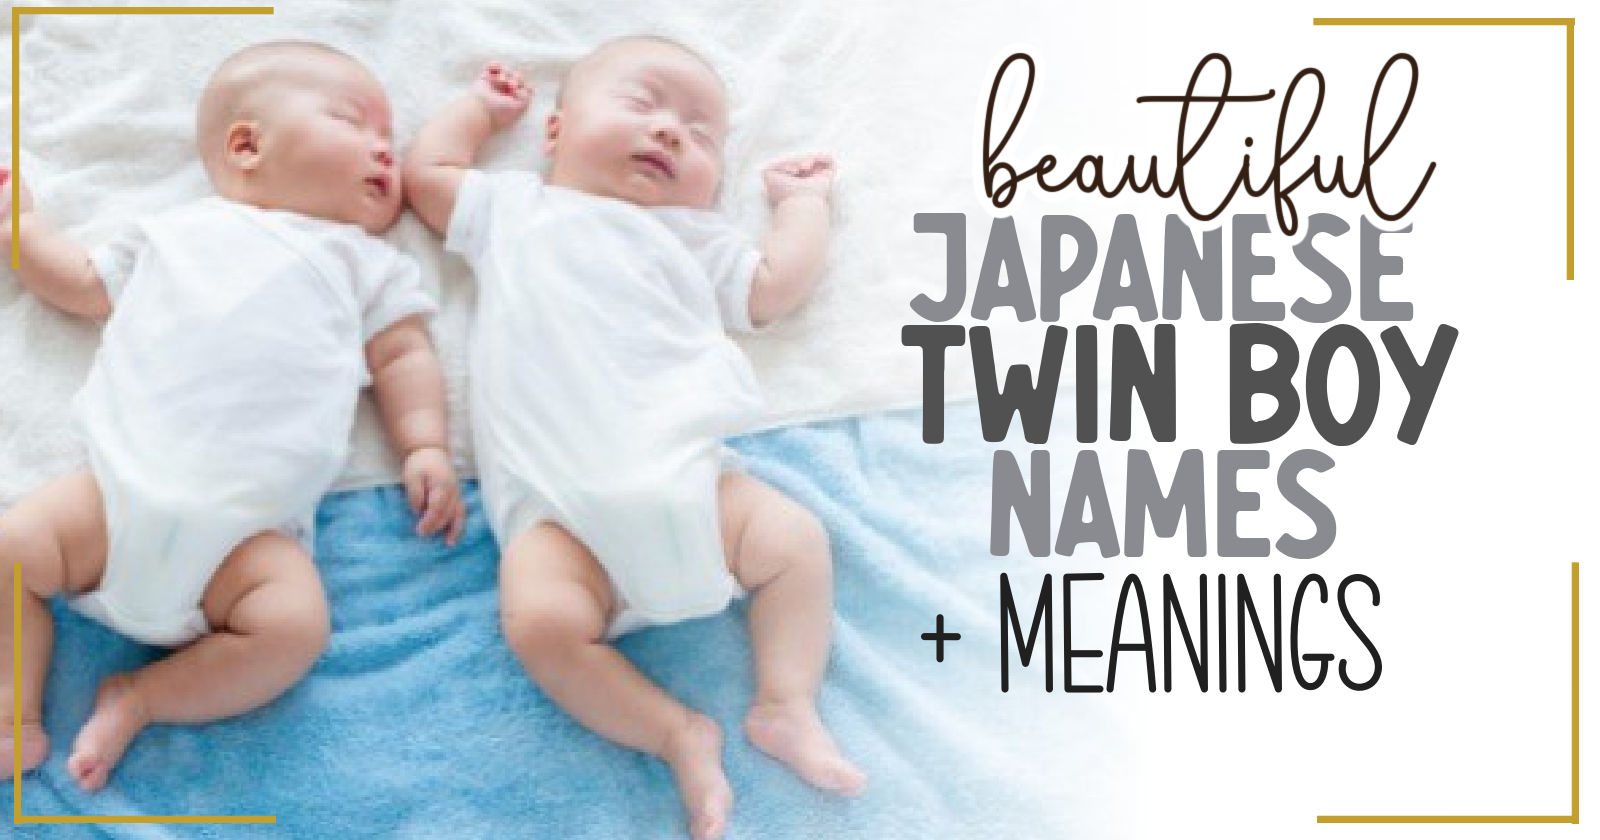 japanese twins sleeping and title beautiful Japanese twin boy names